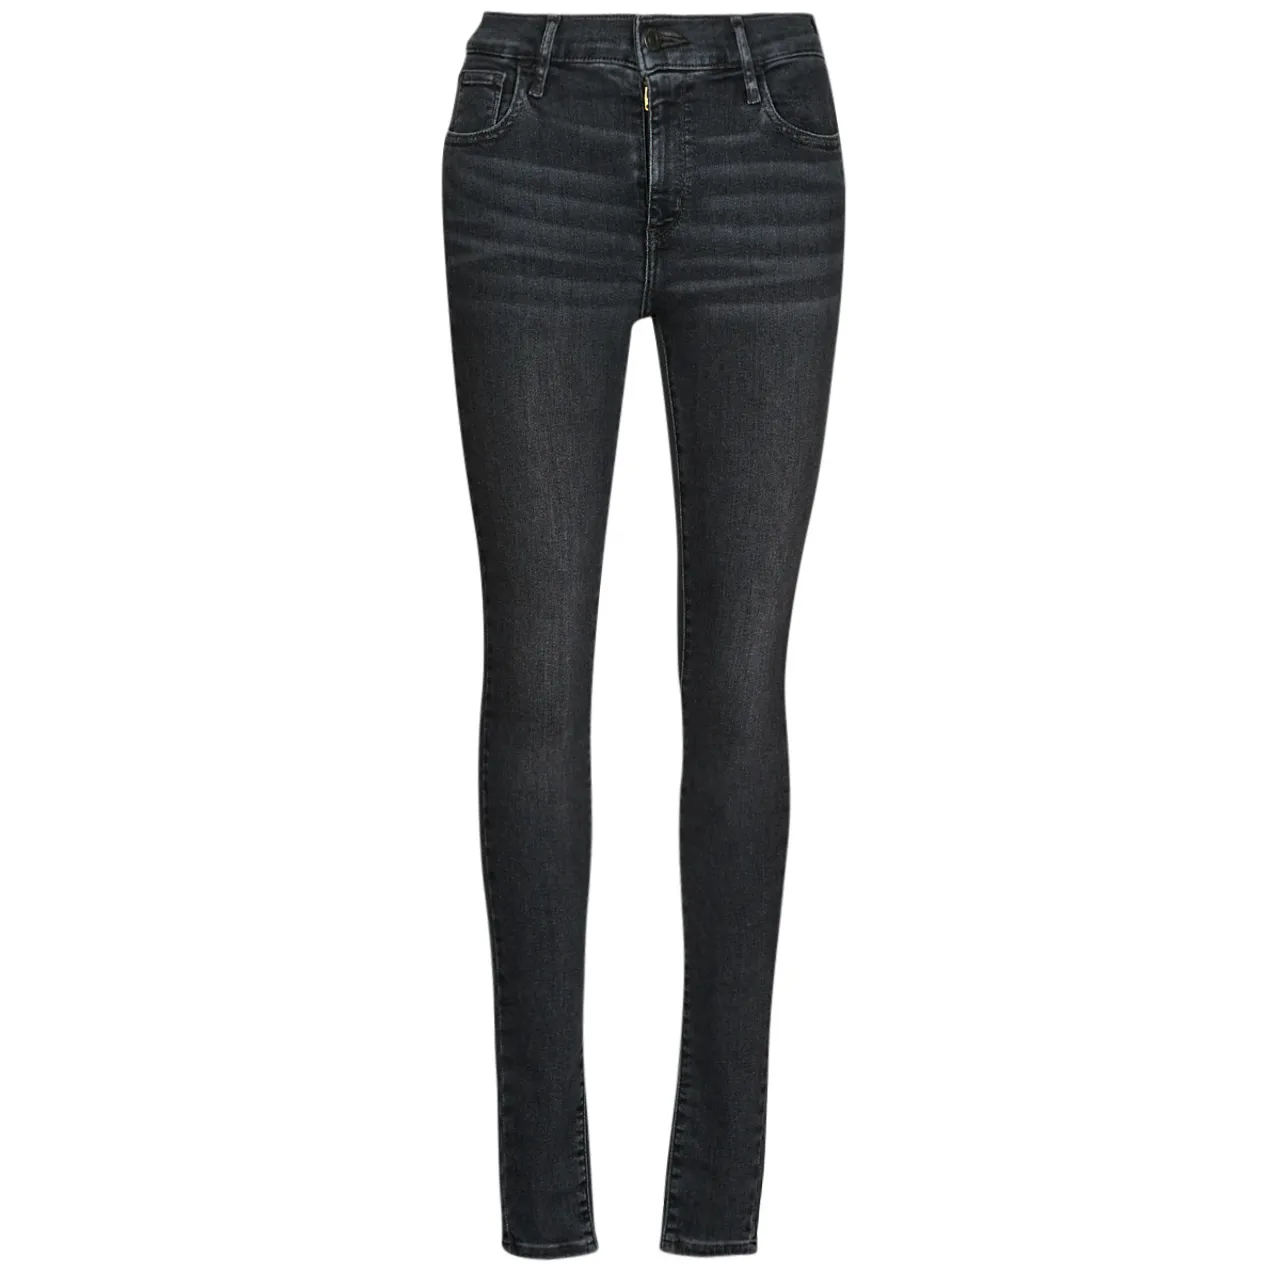 Skinny Jeans Levis 720 HIRISE SUPER SKINNY